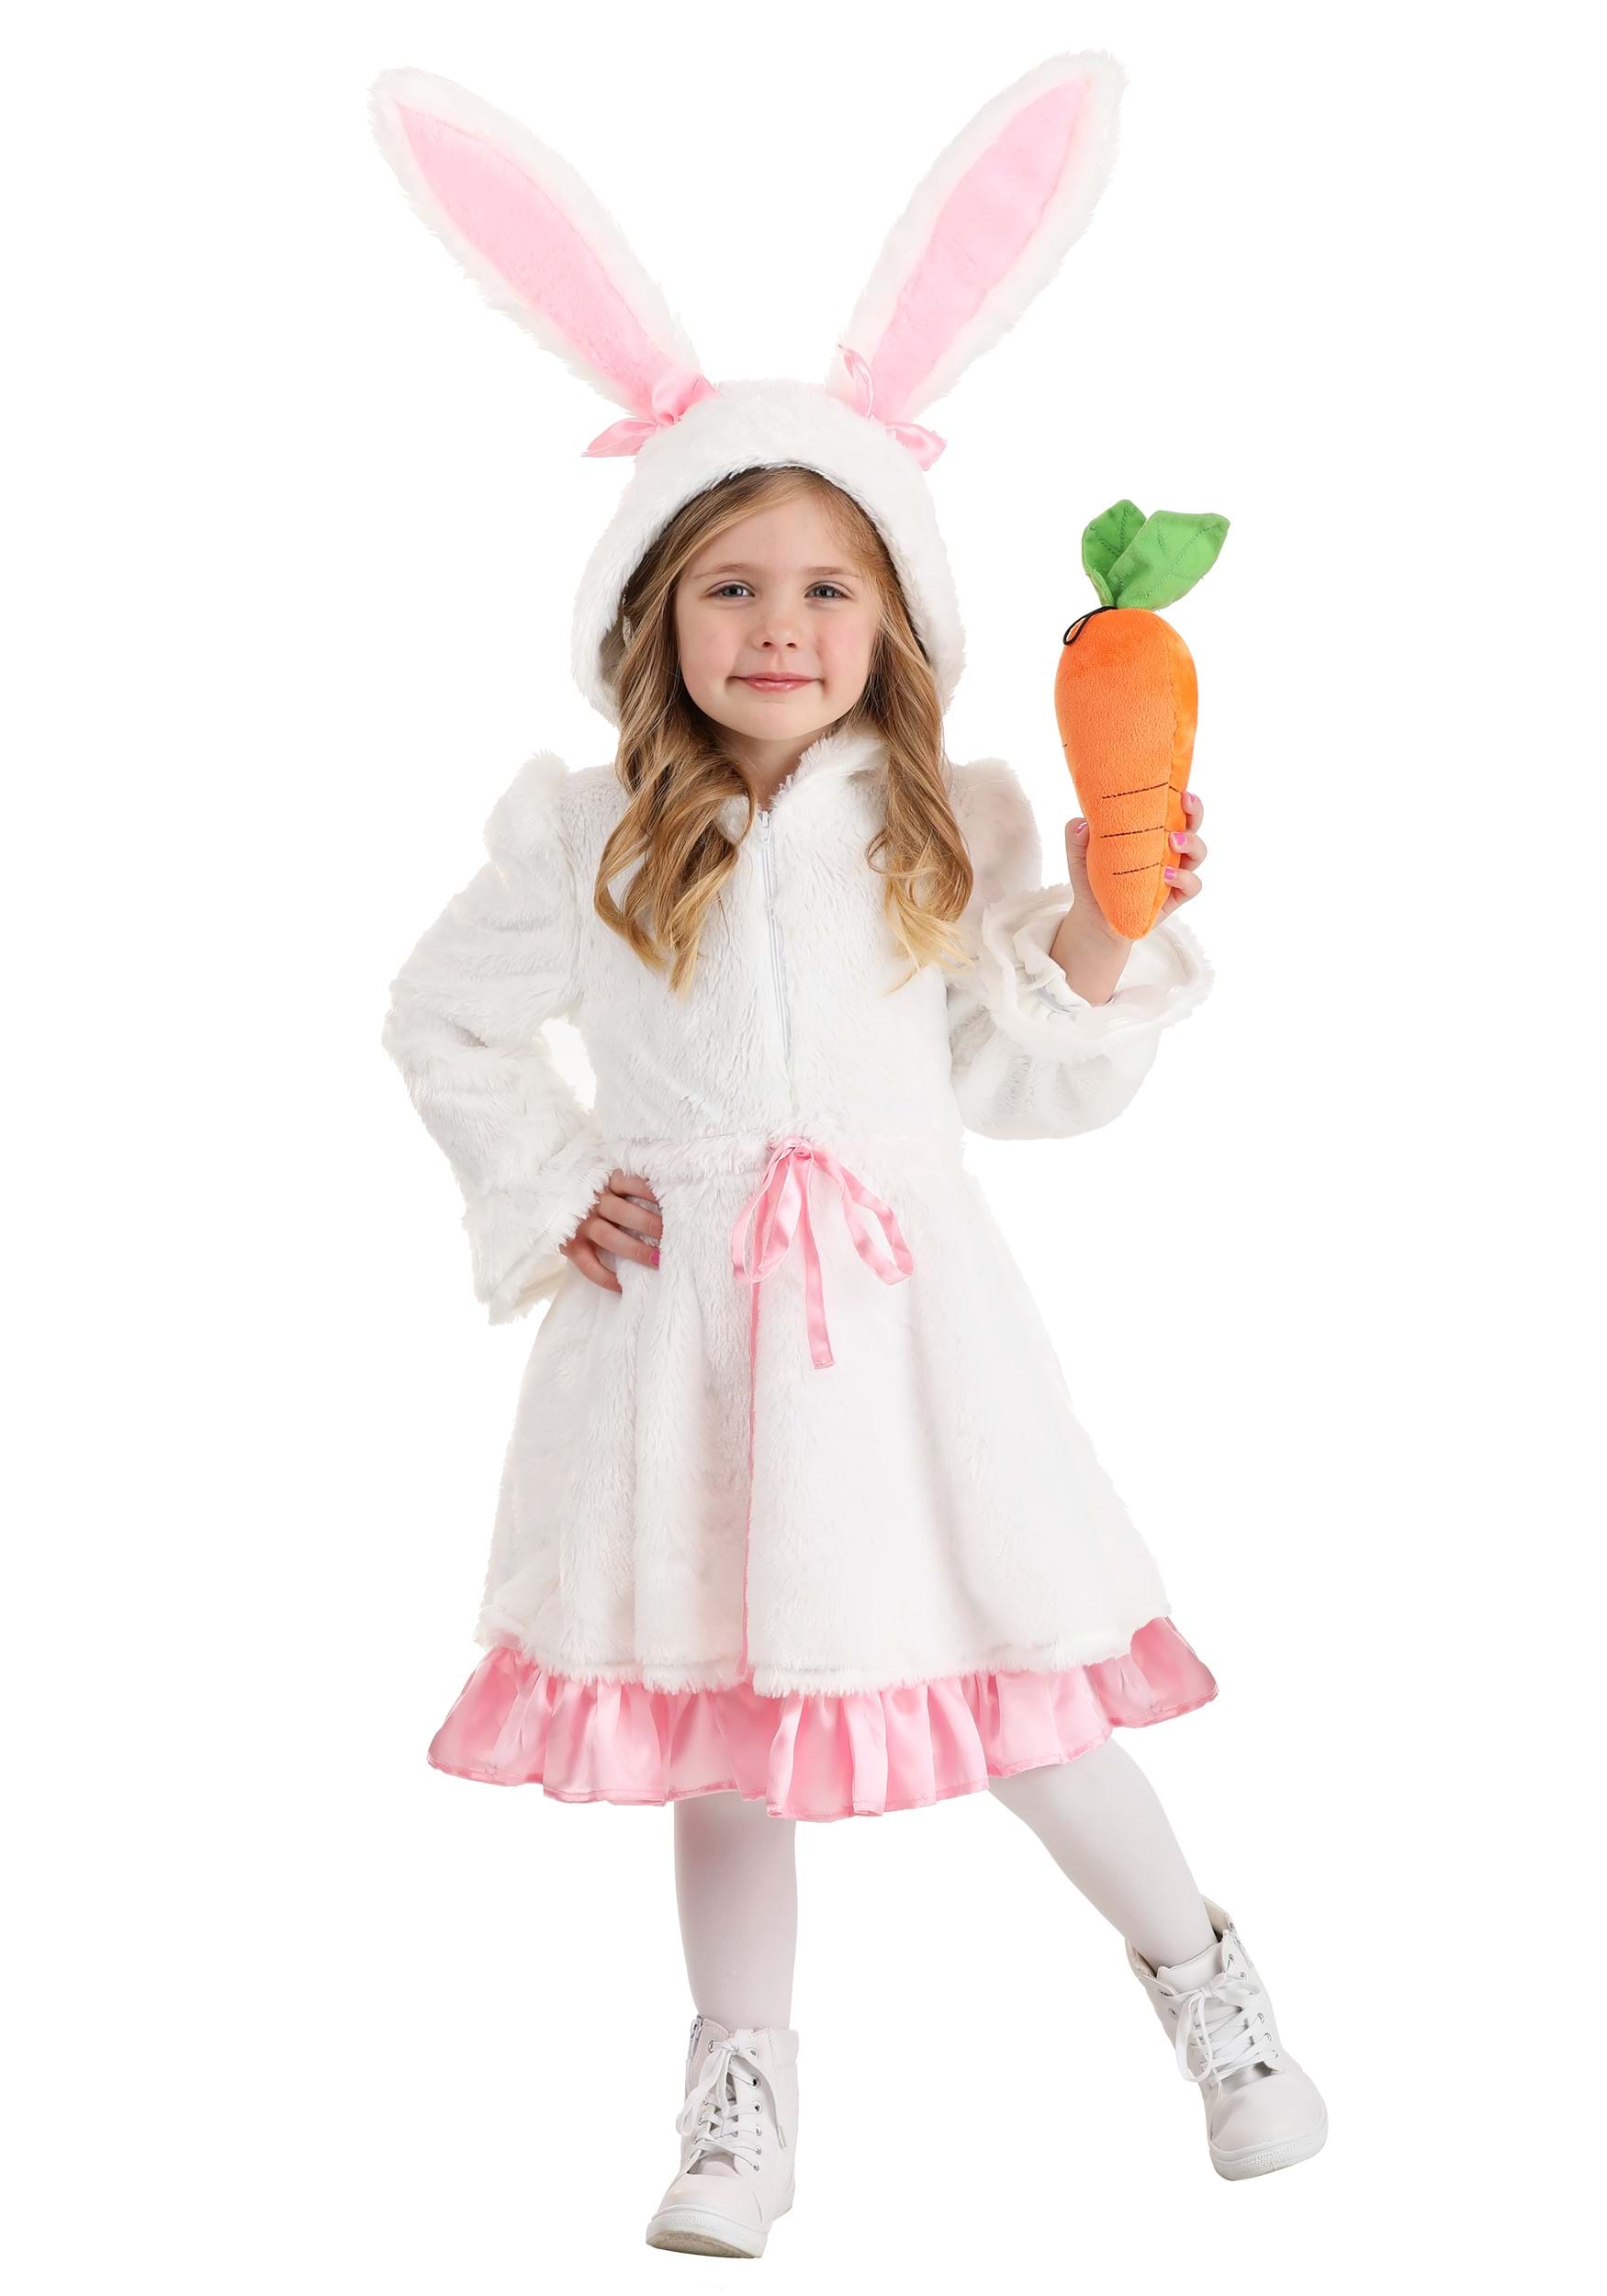 17 Bunny clothes ideas | bunny, bunny outfit, rabbit clothes